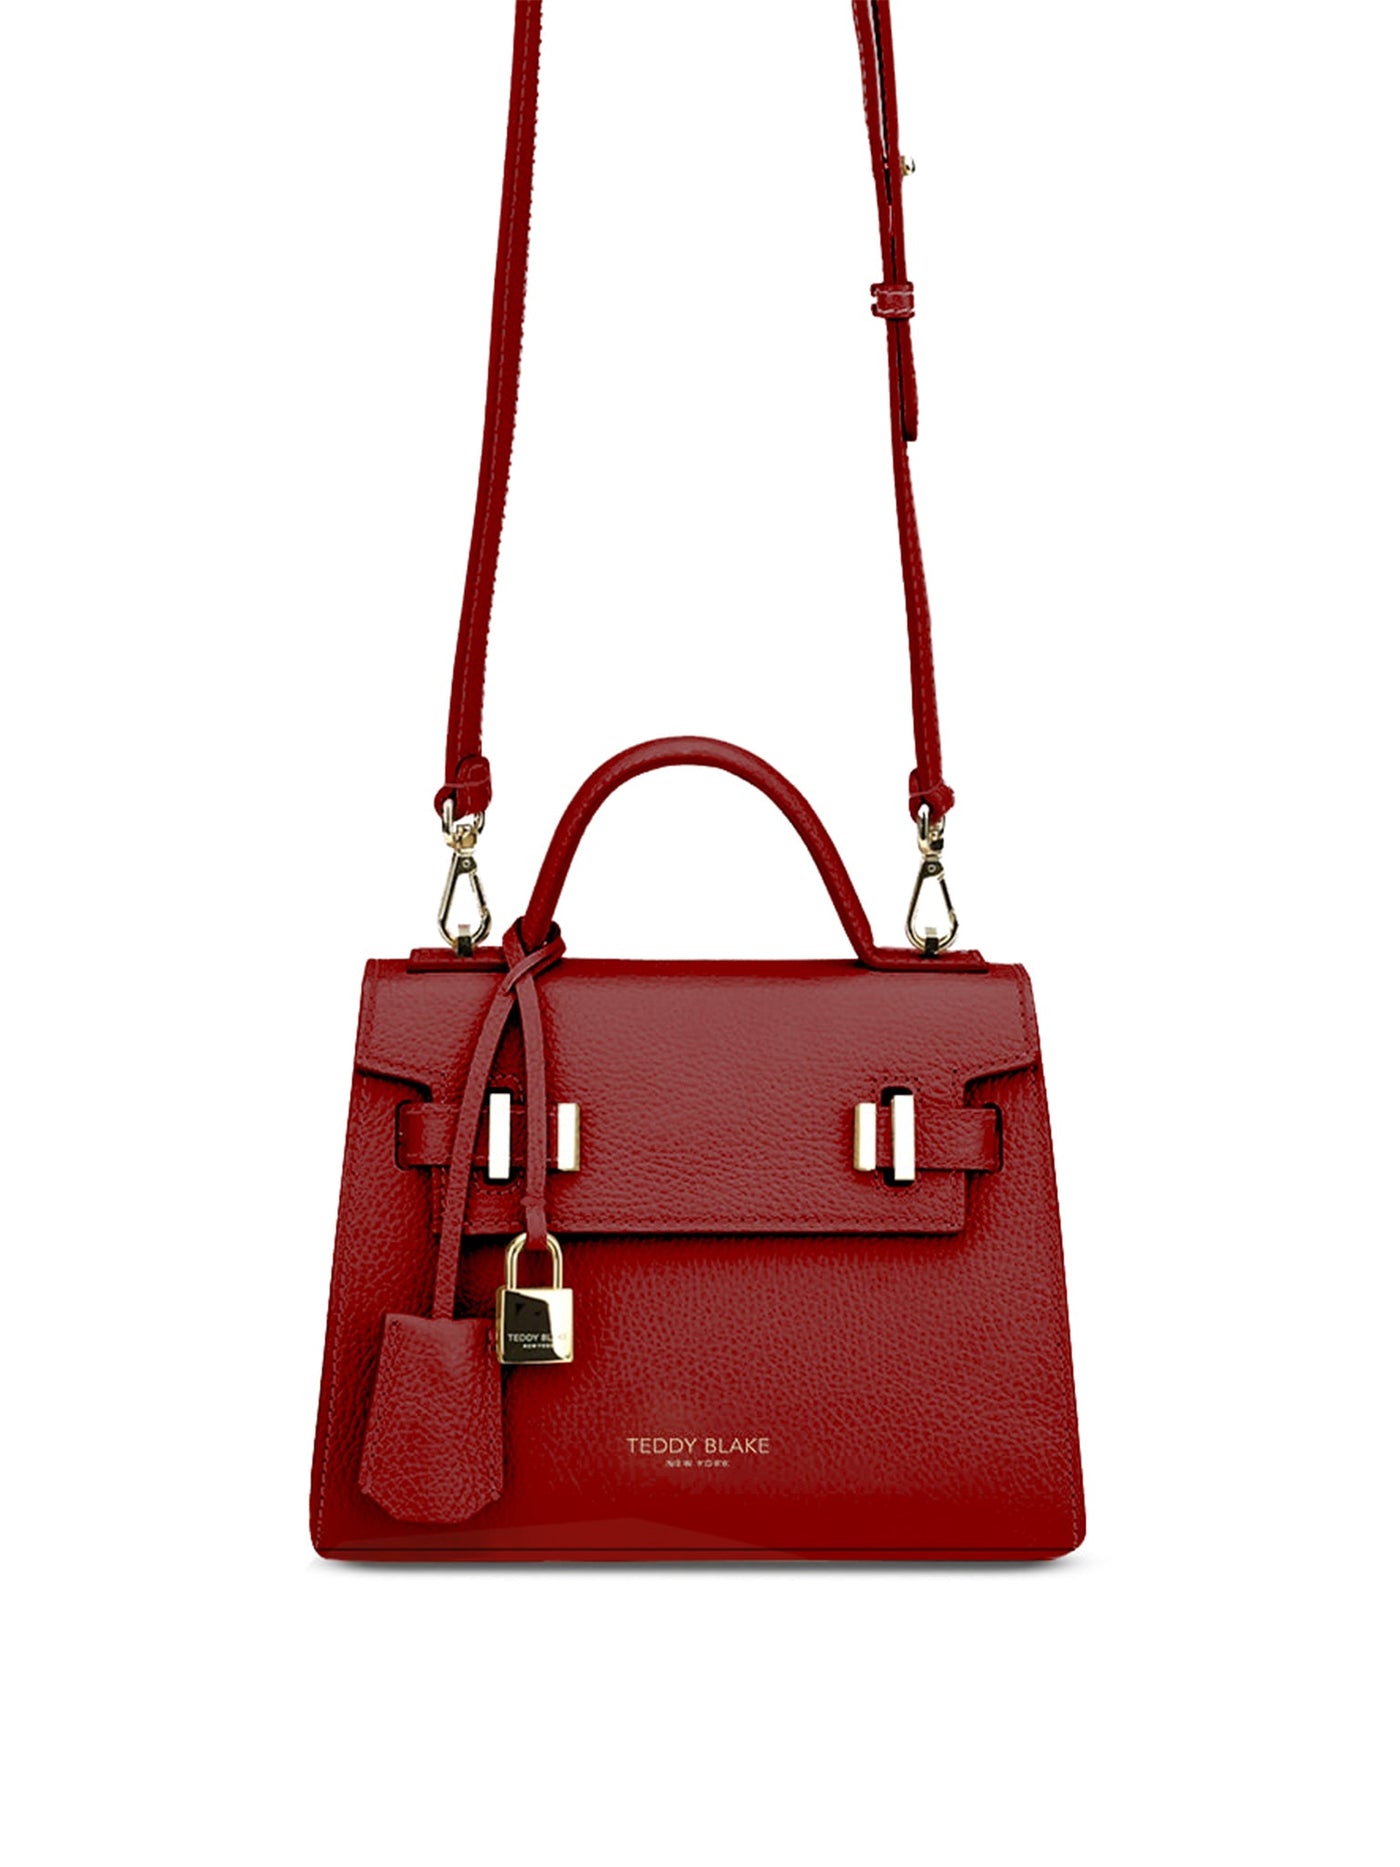 Shop Teddy Blake New York Women's Handbags